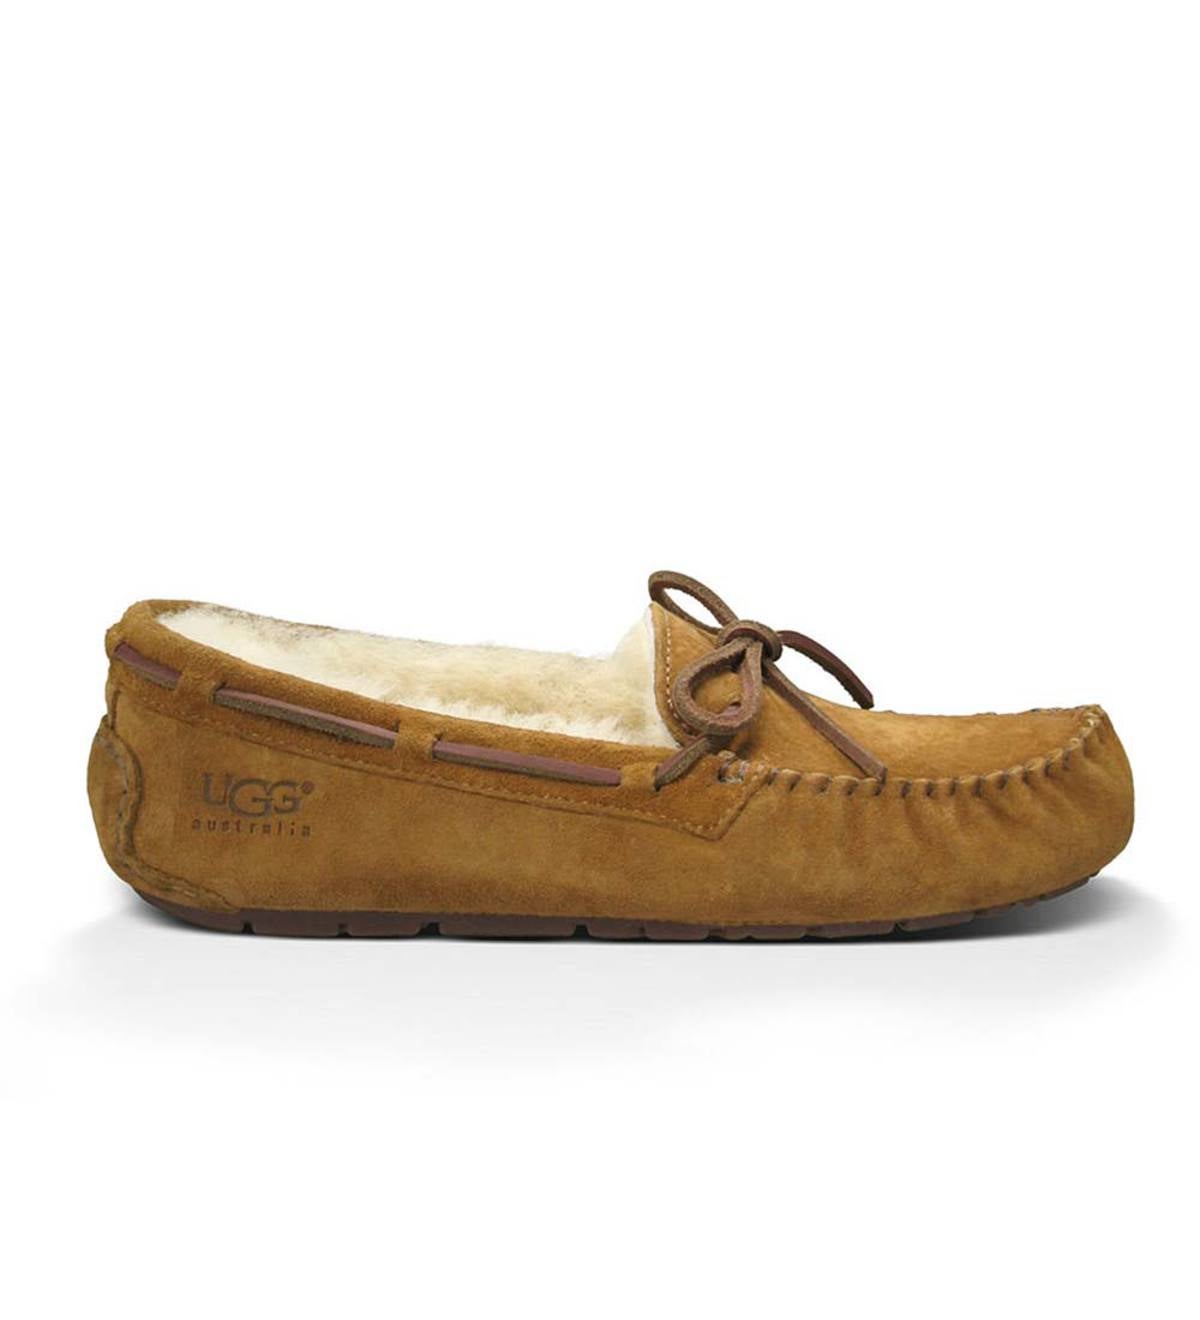 ugg women's dakota slippers